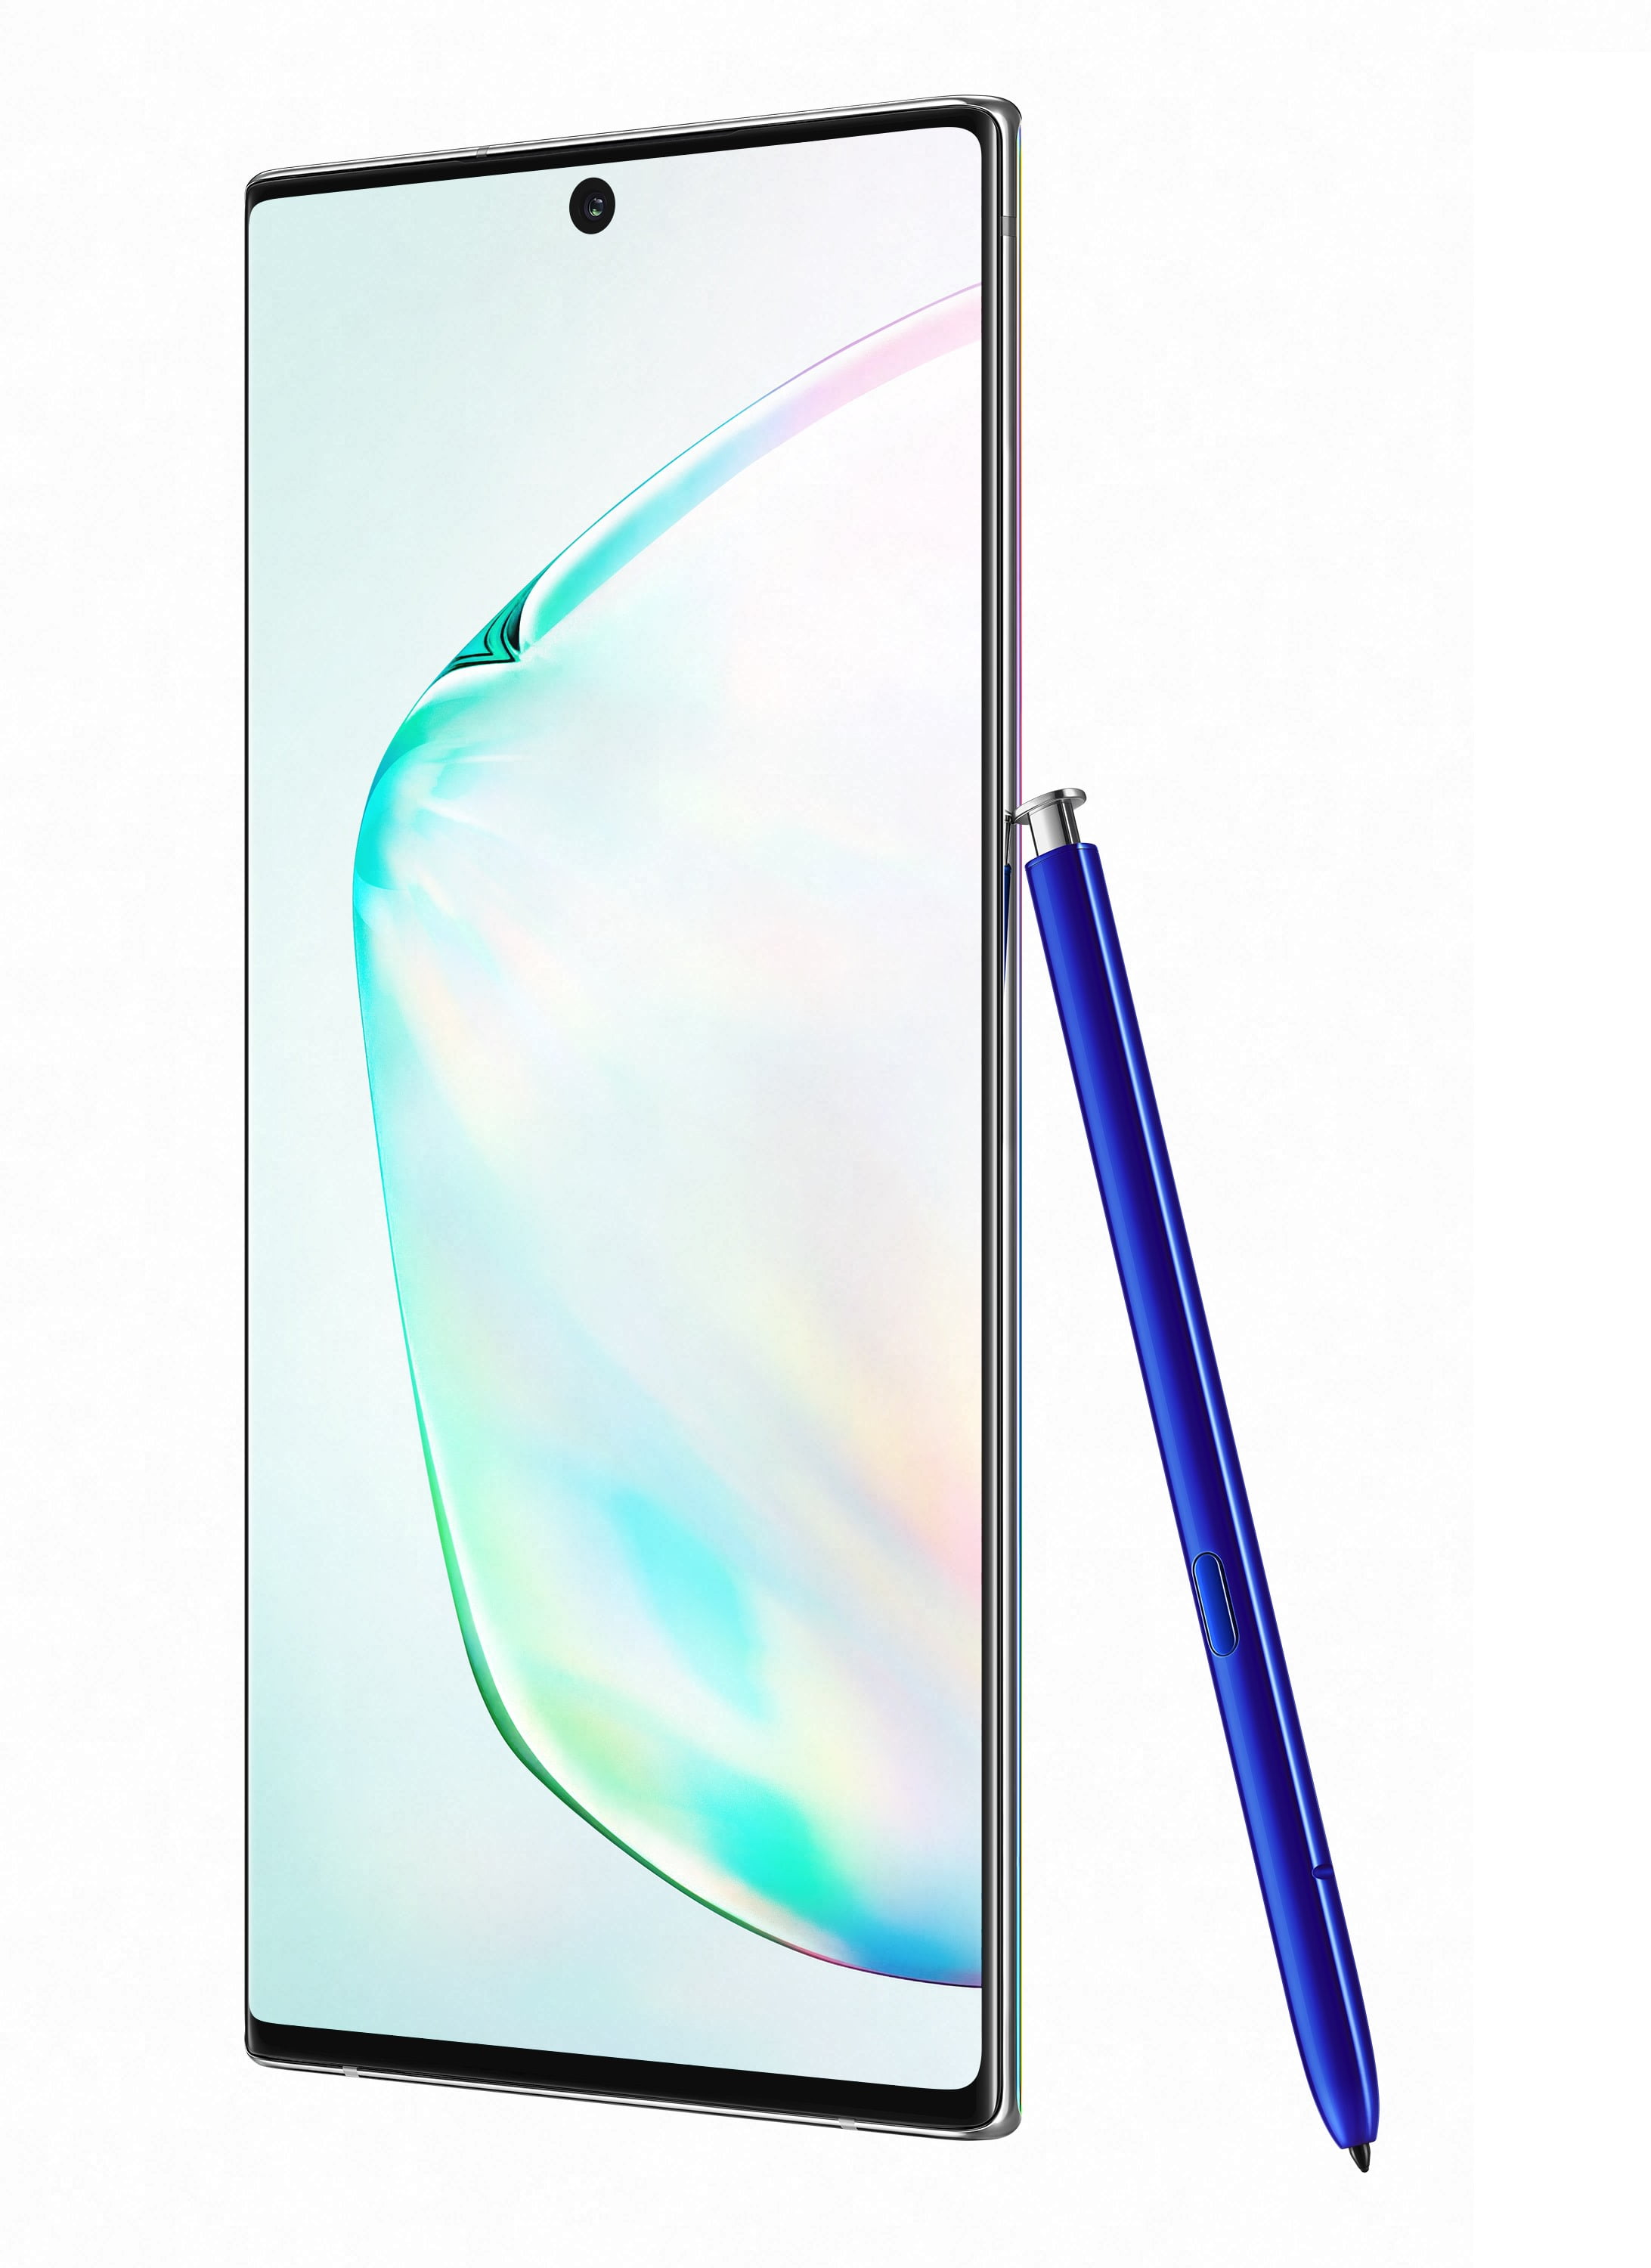  Samsung Galaxy Note 10+ Plus 256GB with S Pen Aura Blue  (Factory Unlocked for GSM & CDMA, 6.8 Inch Display, U.S. Warranty)  SM-N975UZBAXAA (Renewed) : Cell Phones & Accessories